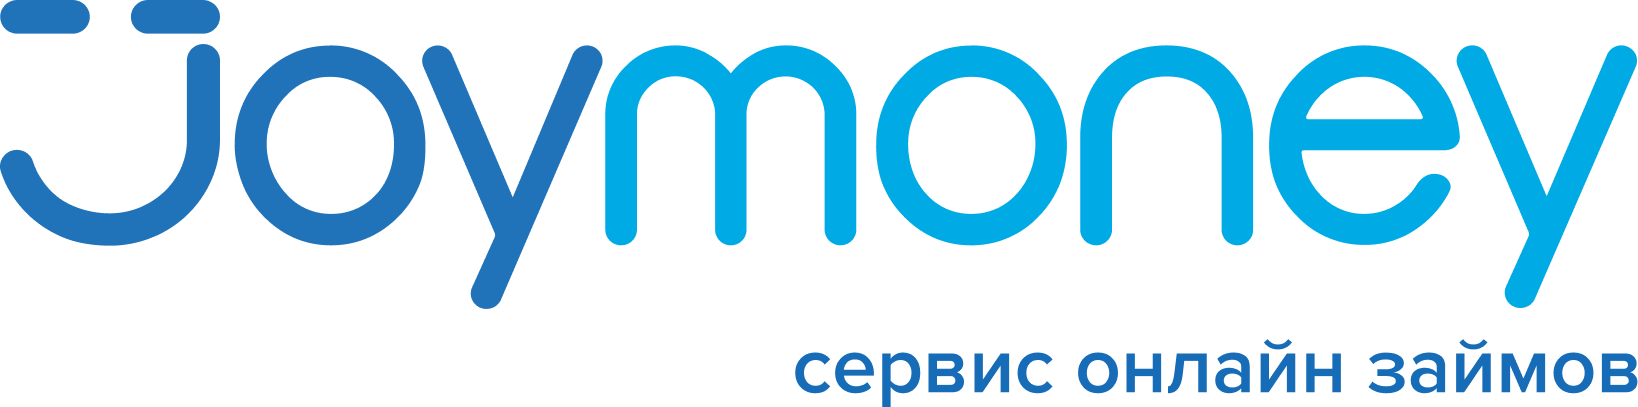 Joy.money Logo